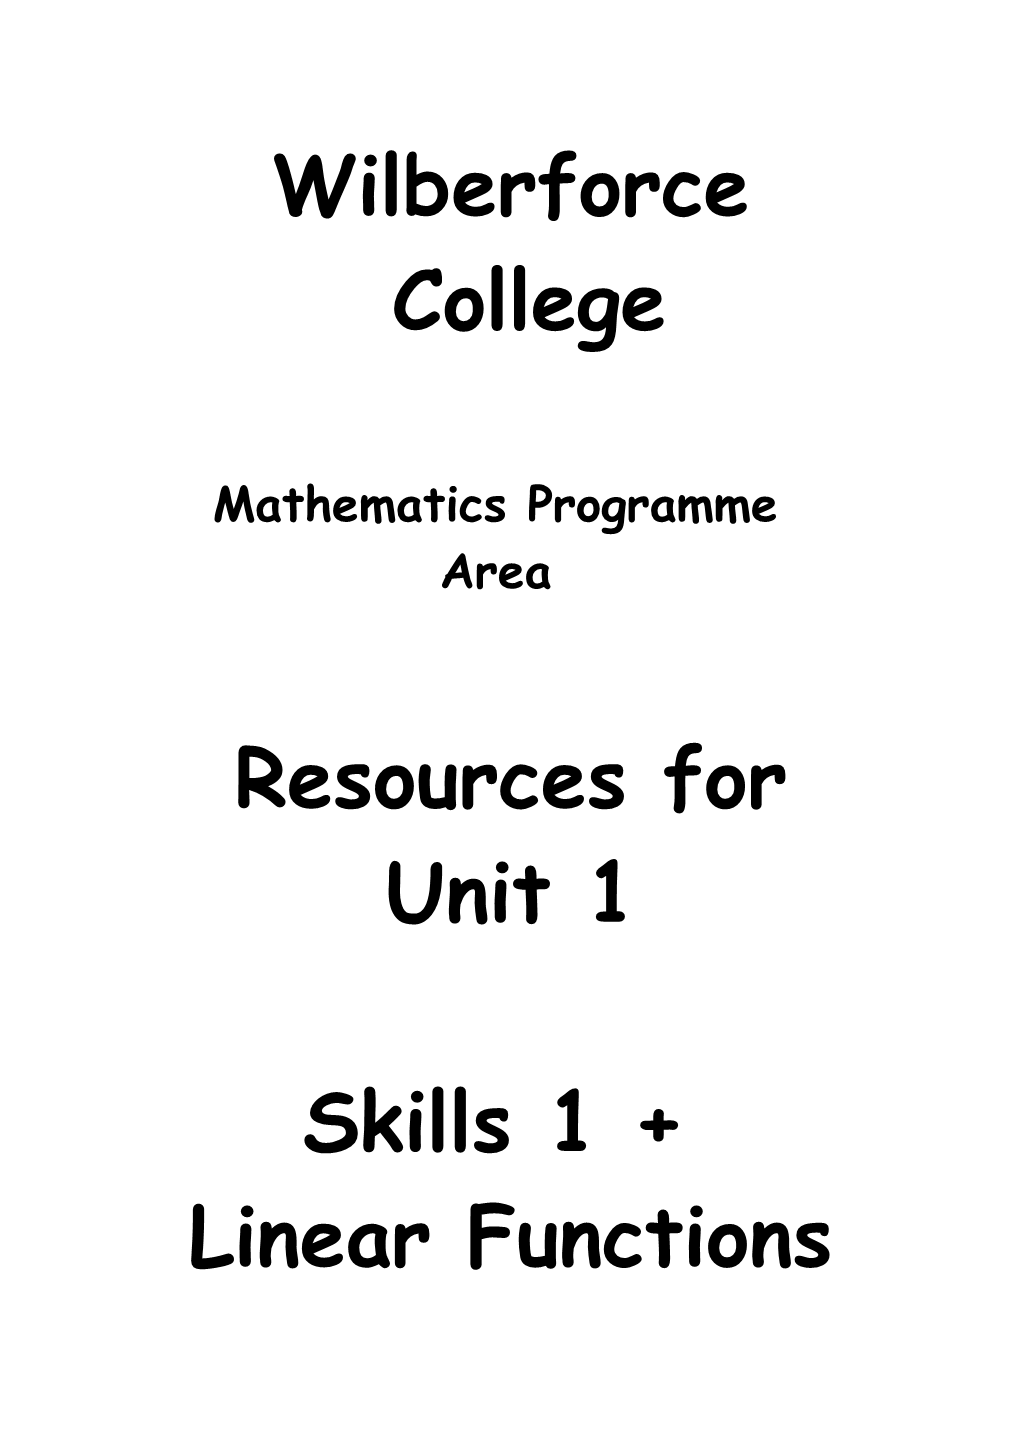 Mathematics Programme Area